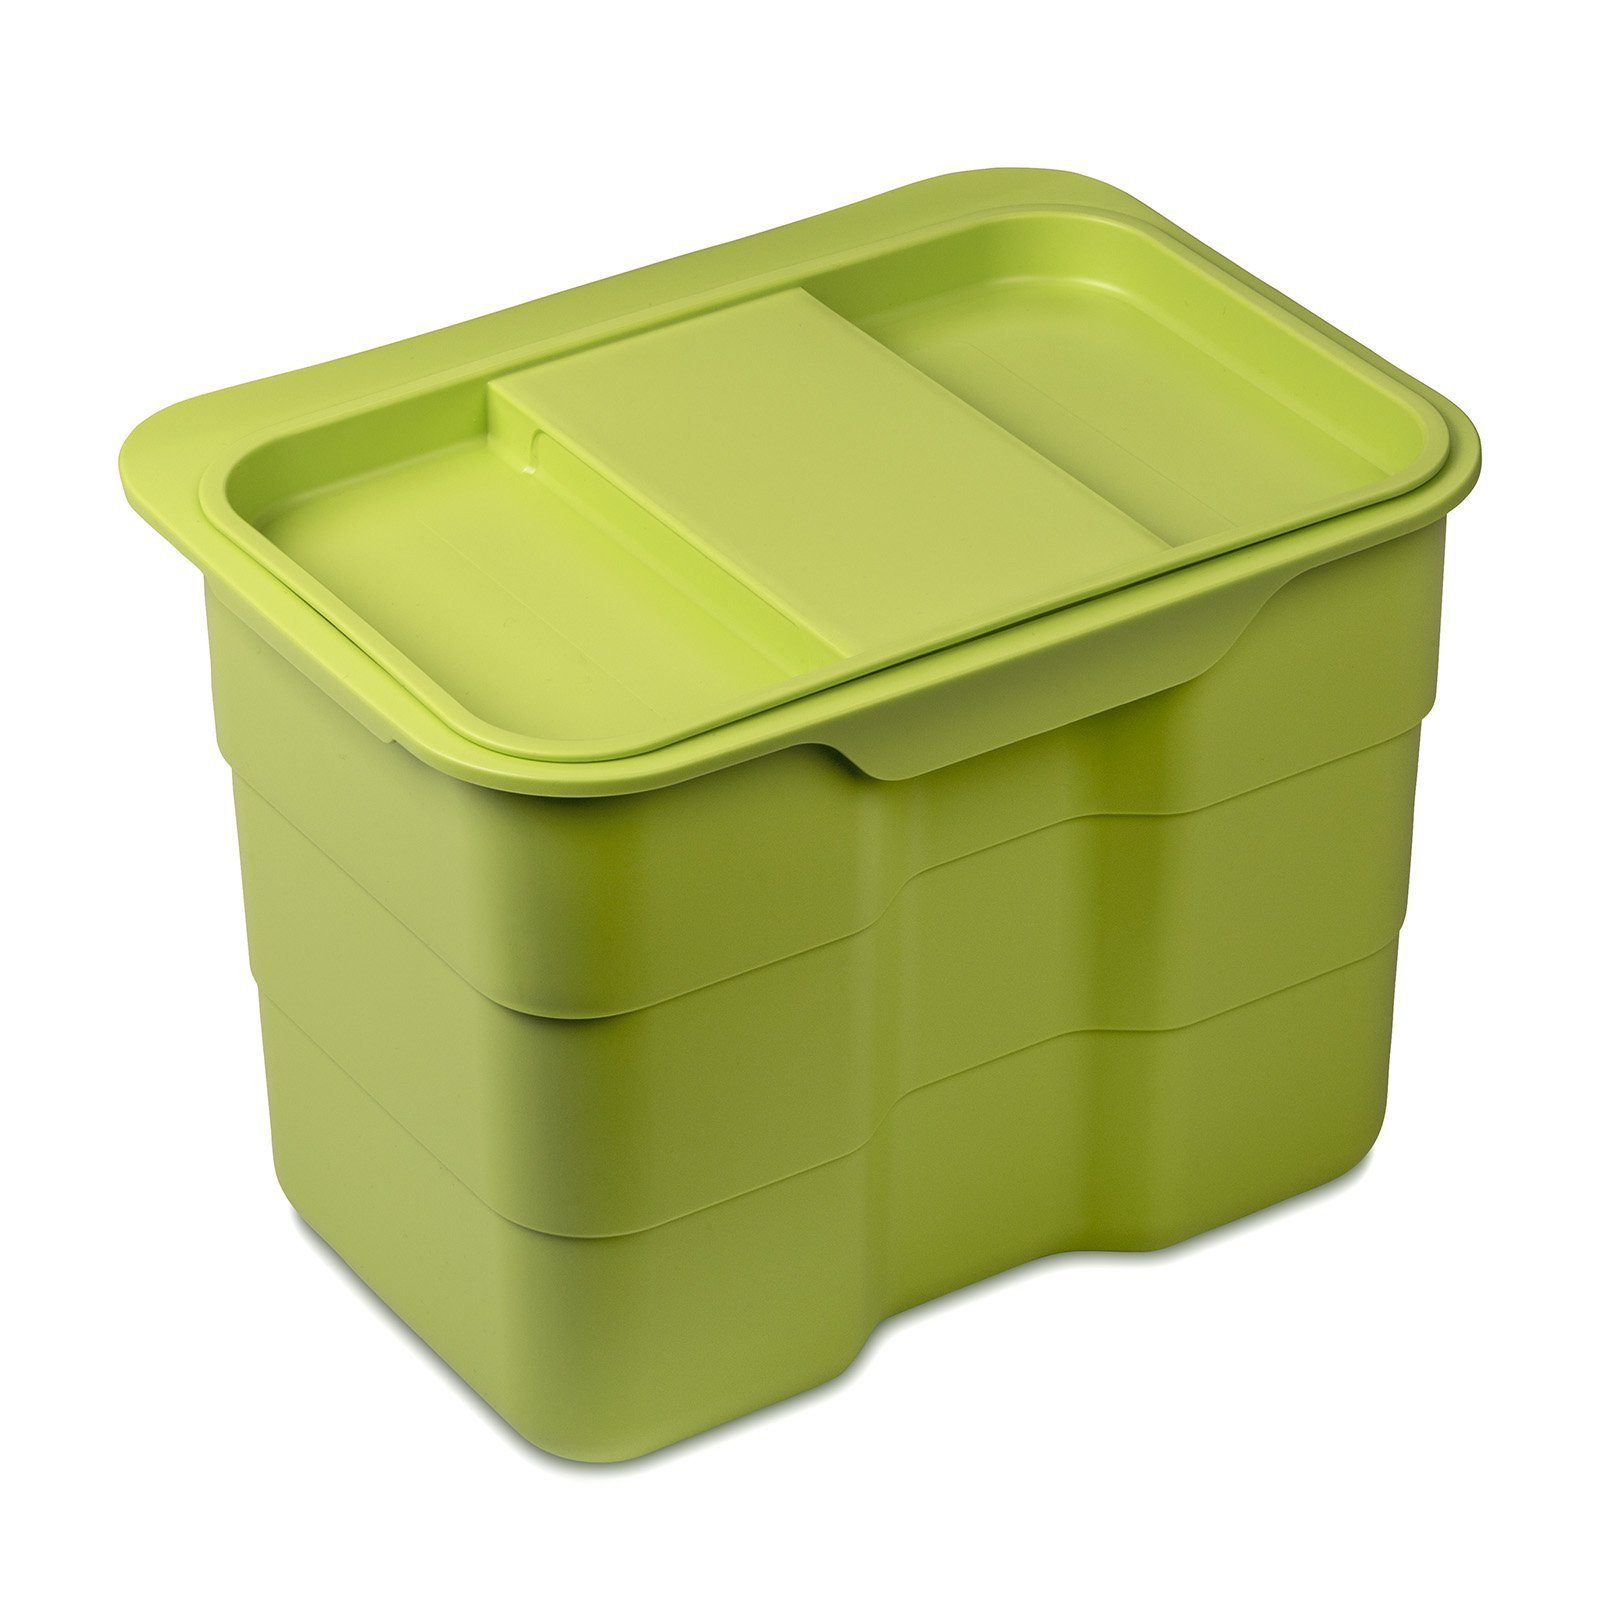 SO-TECH® Mülltrennsystem essensa biobin mit Deckel 4,2 L Multifunktionsbehälter, Biomülleimer grün